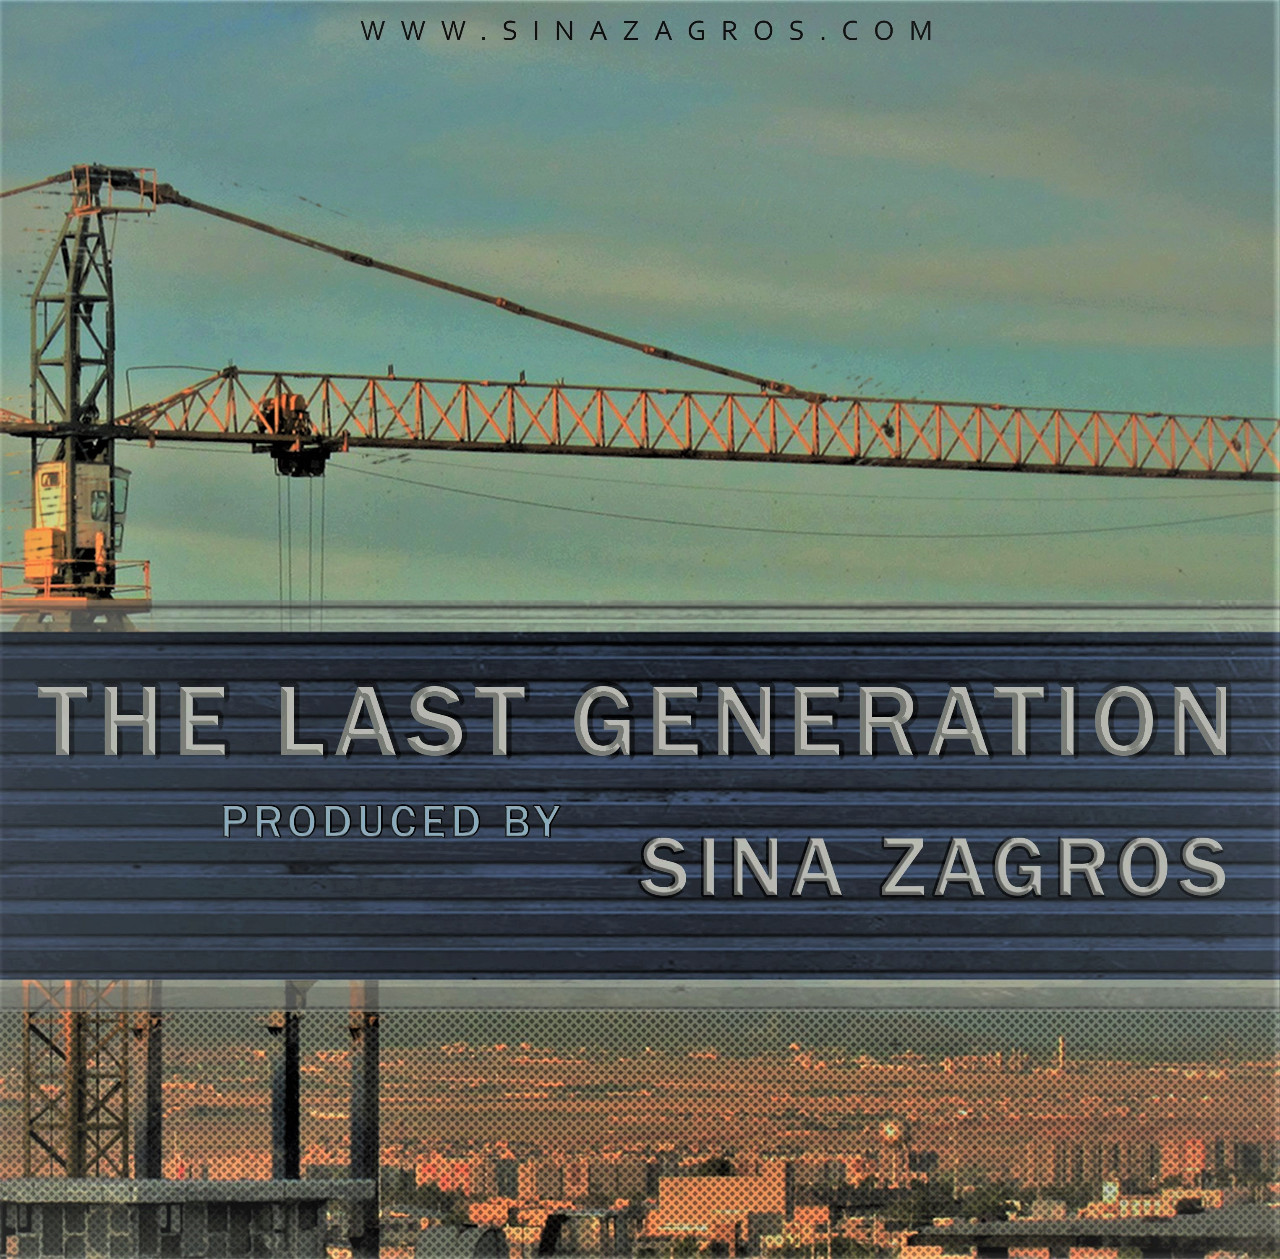 Sina Zagros - The Last Generation Album